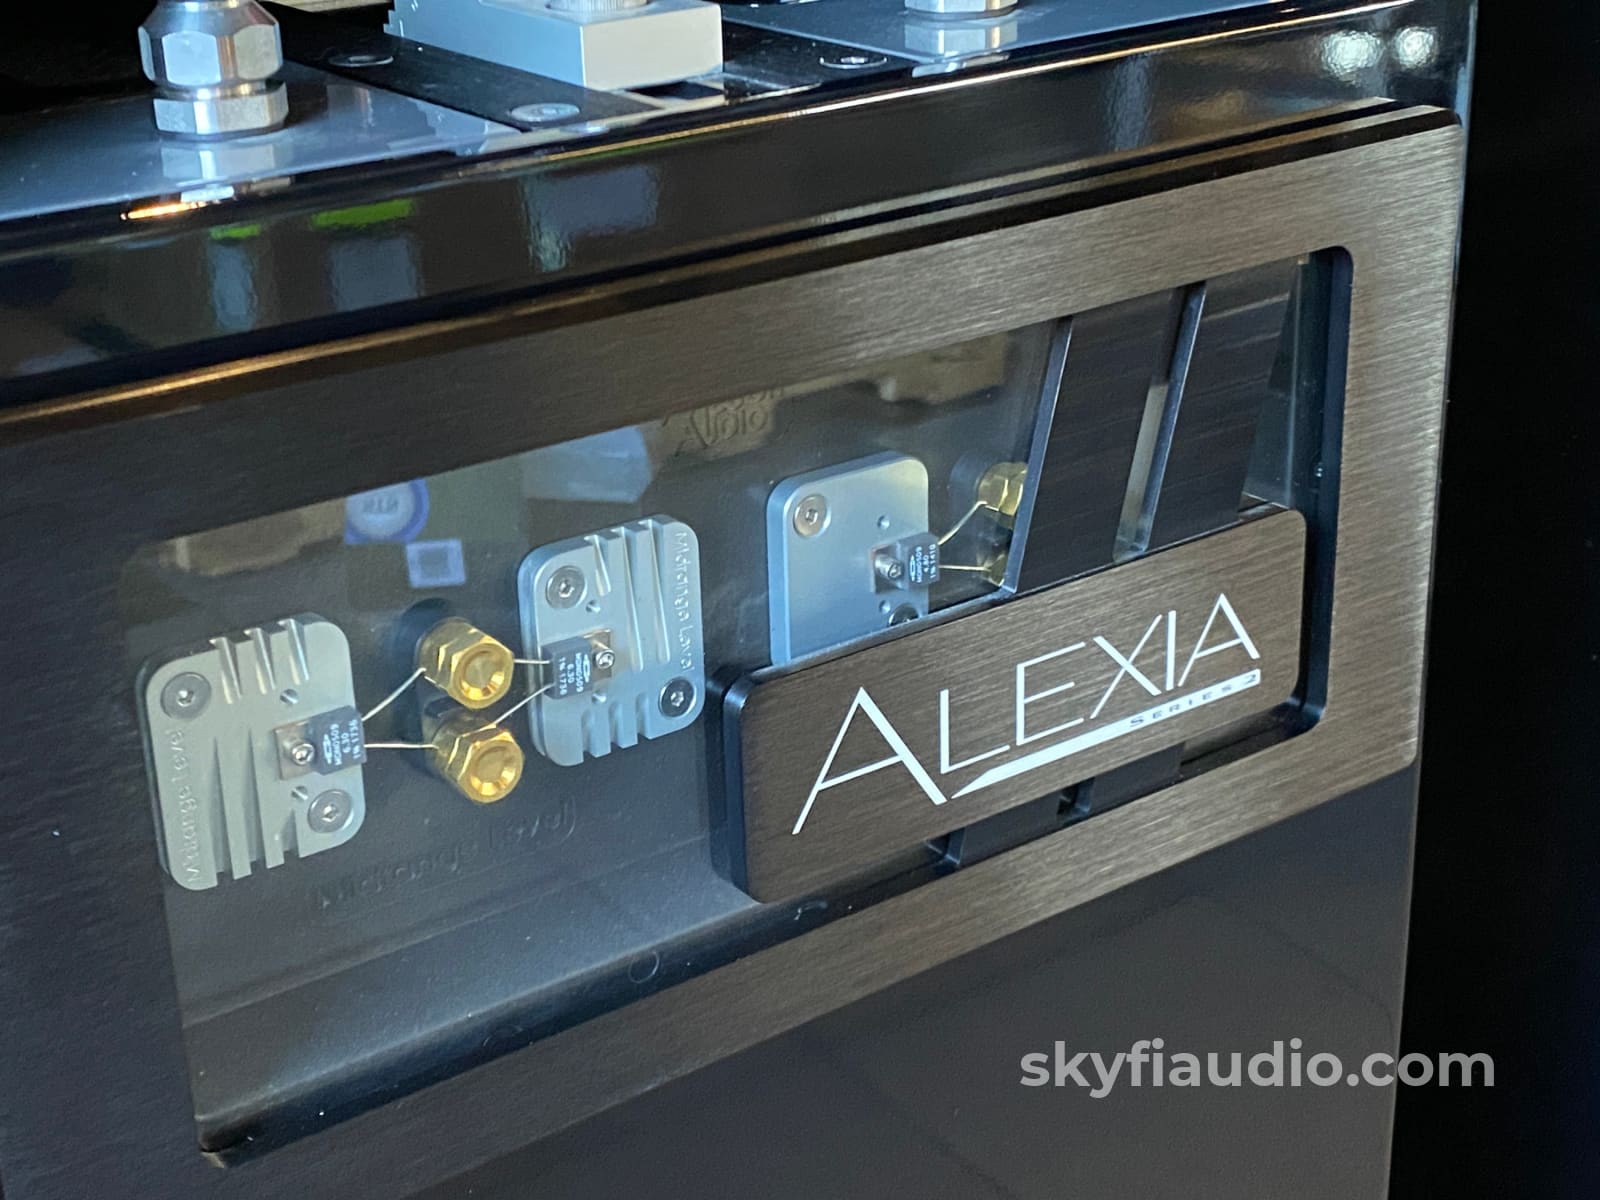 Wilson Audio Alexia Series 2 Speakers - Tas Editors Choice